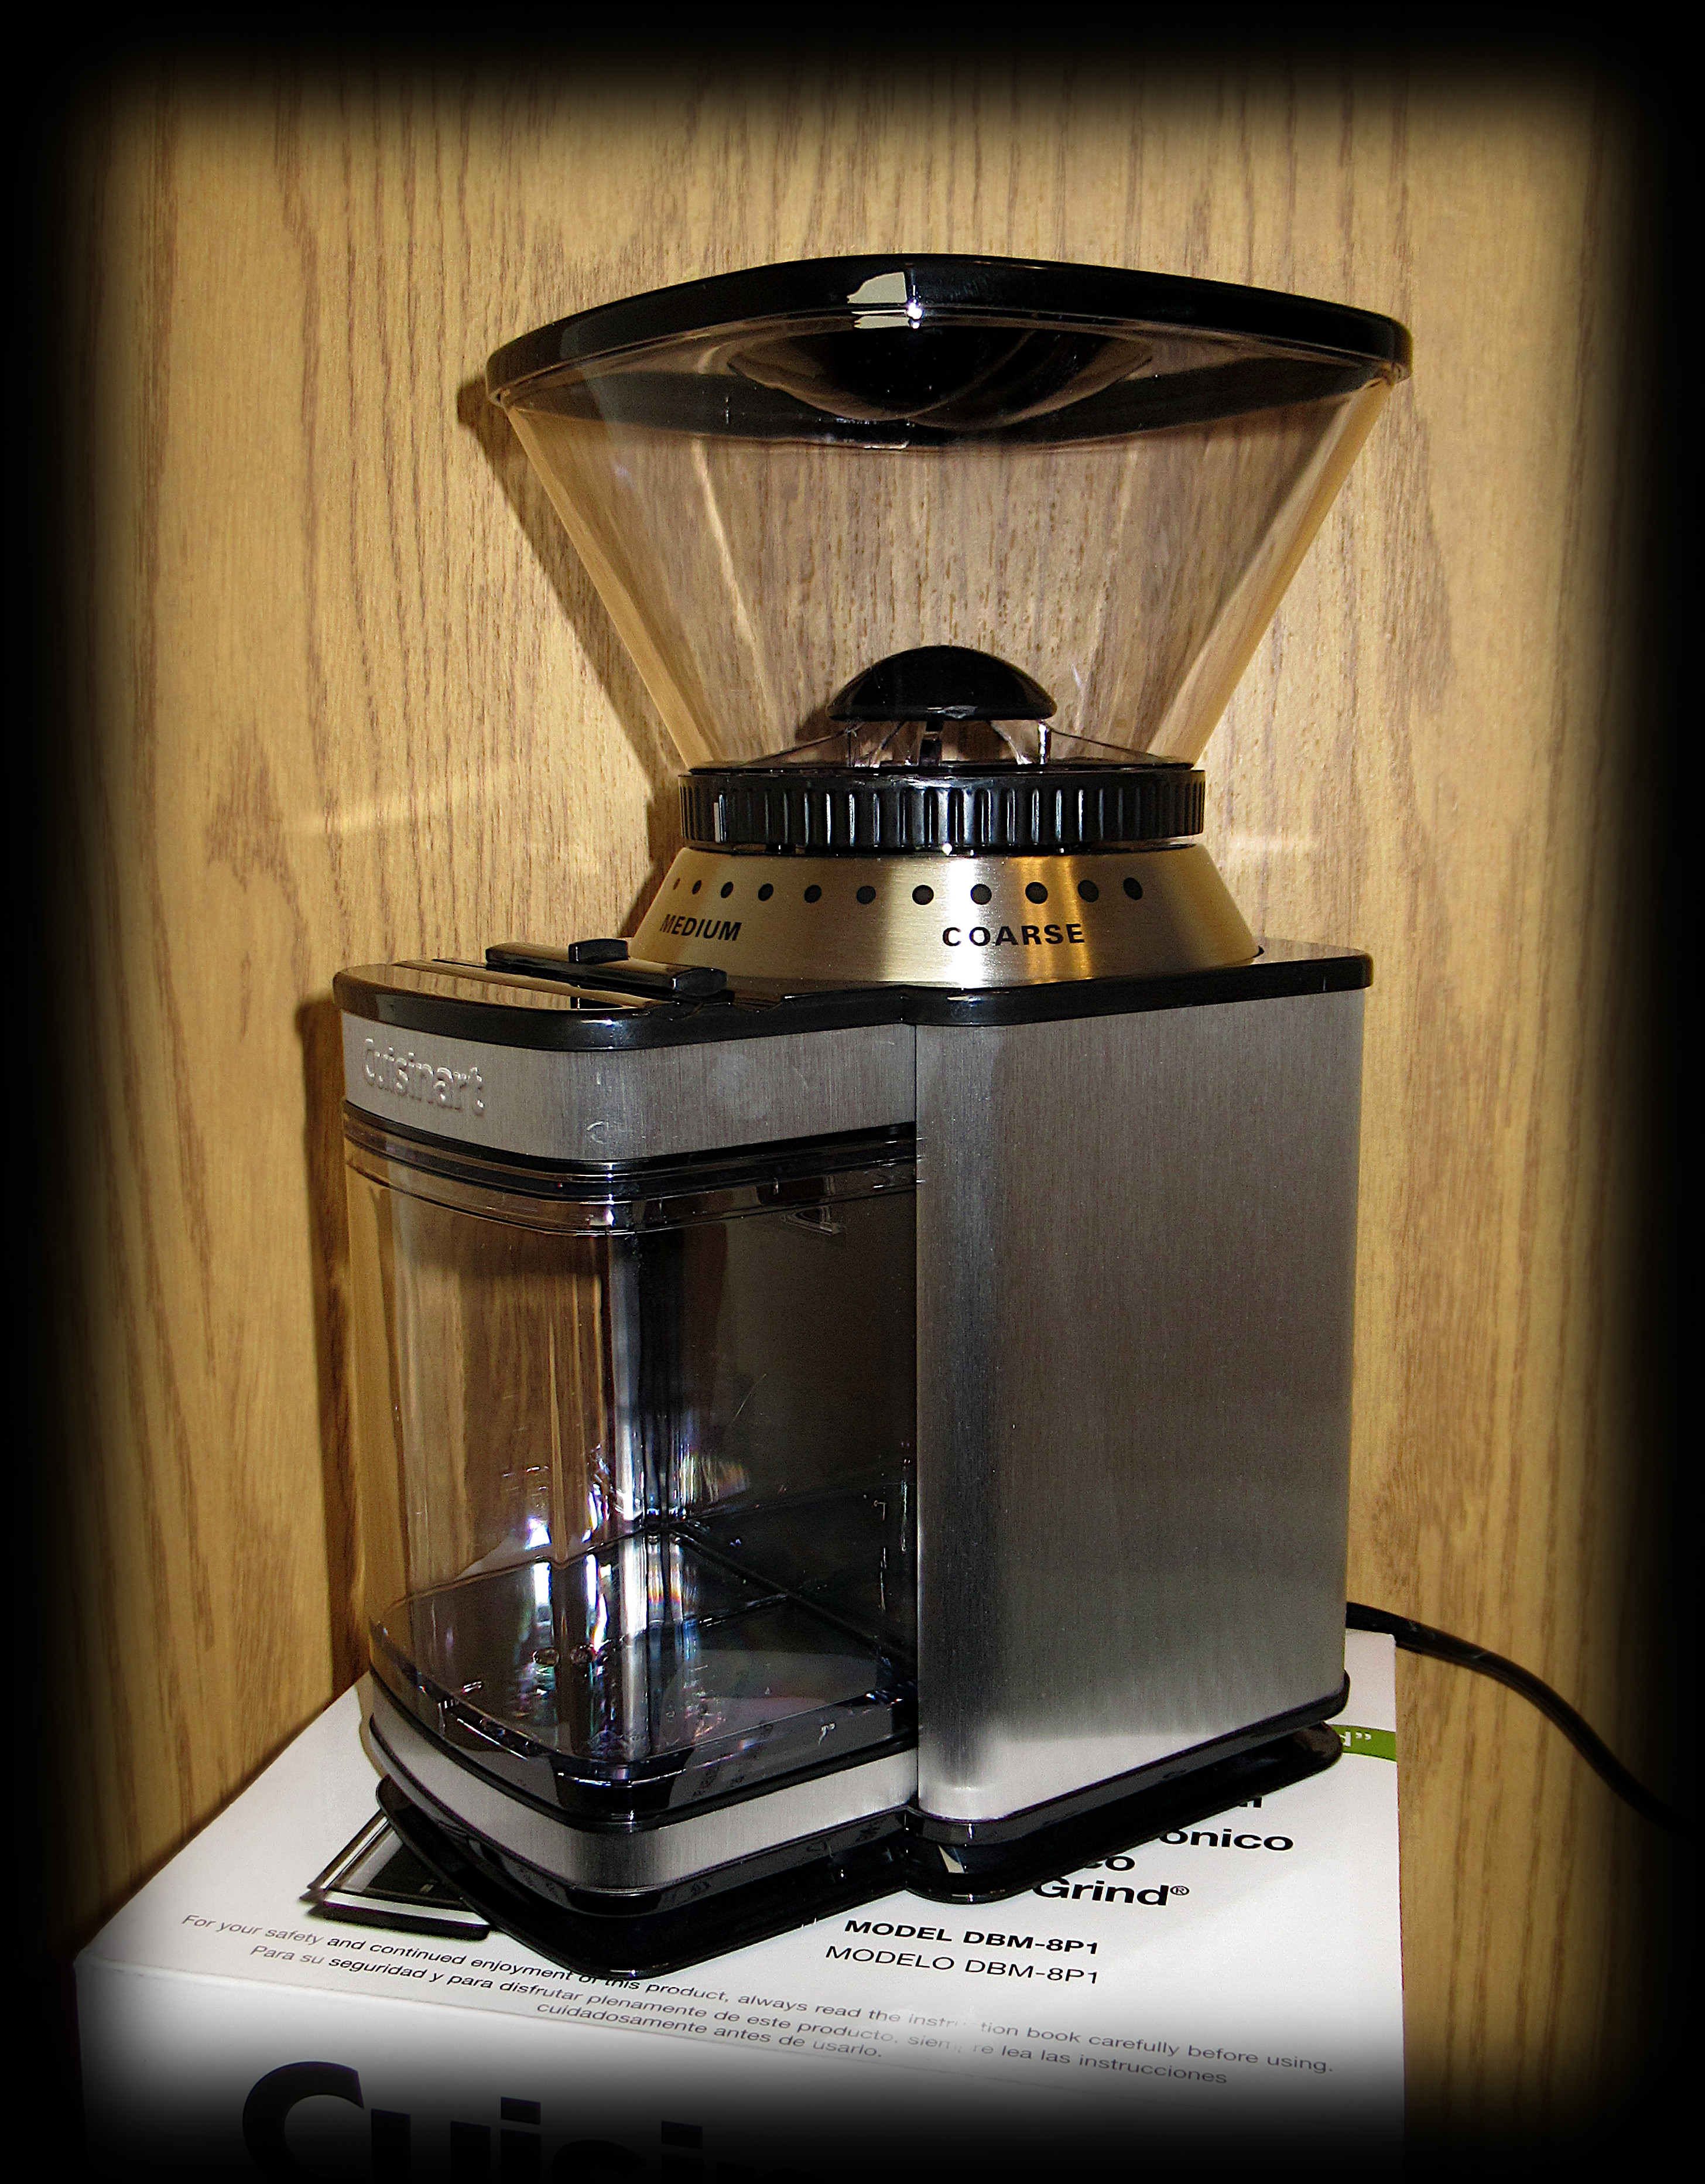 Cuisinart Supreme Grind Automatic Burr Coffee Grinder